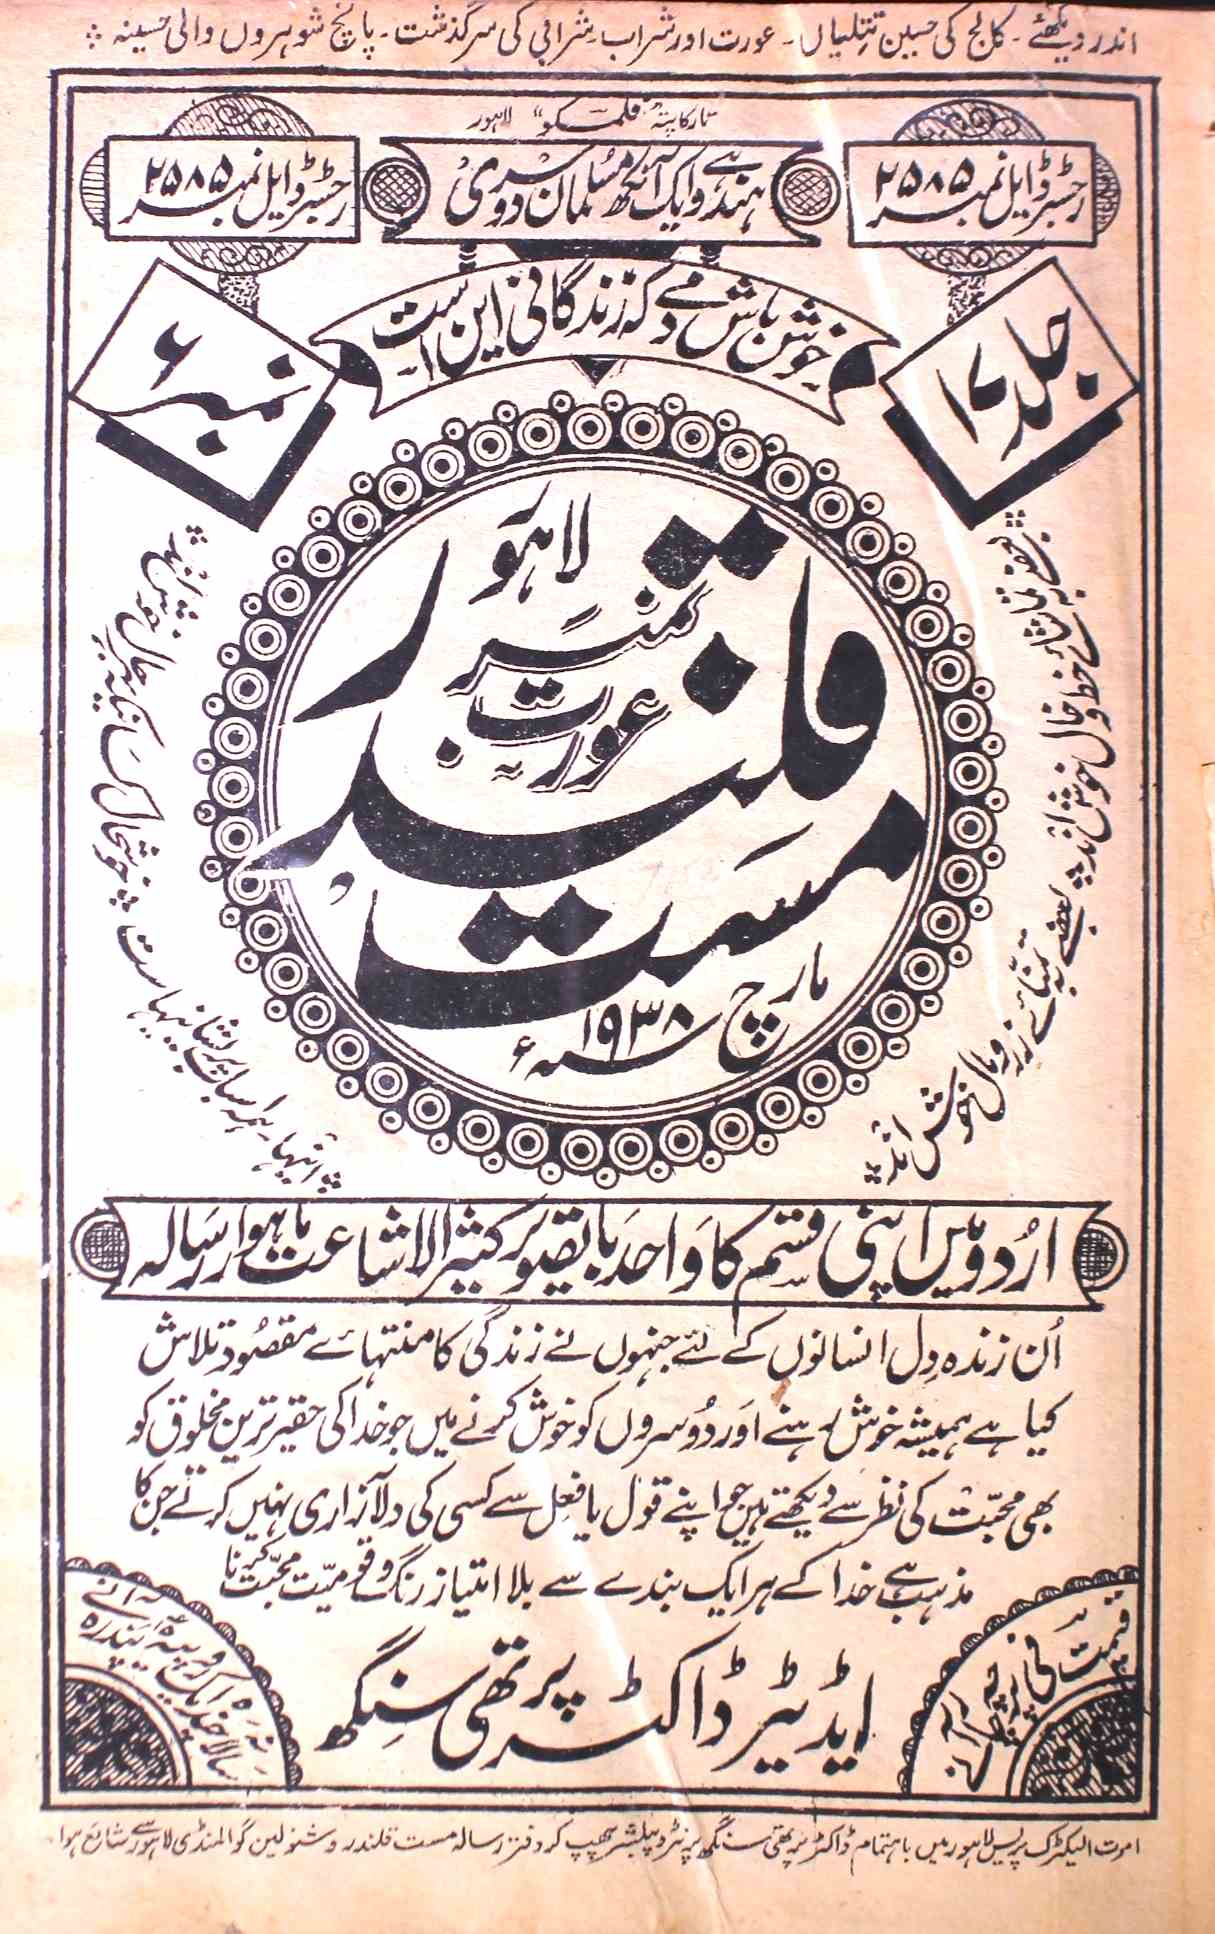 Mast Qalandar Jild 17 No 6 March 1938-SVK-Shumara Number-006